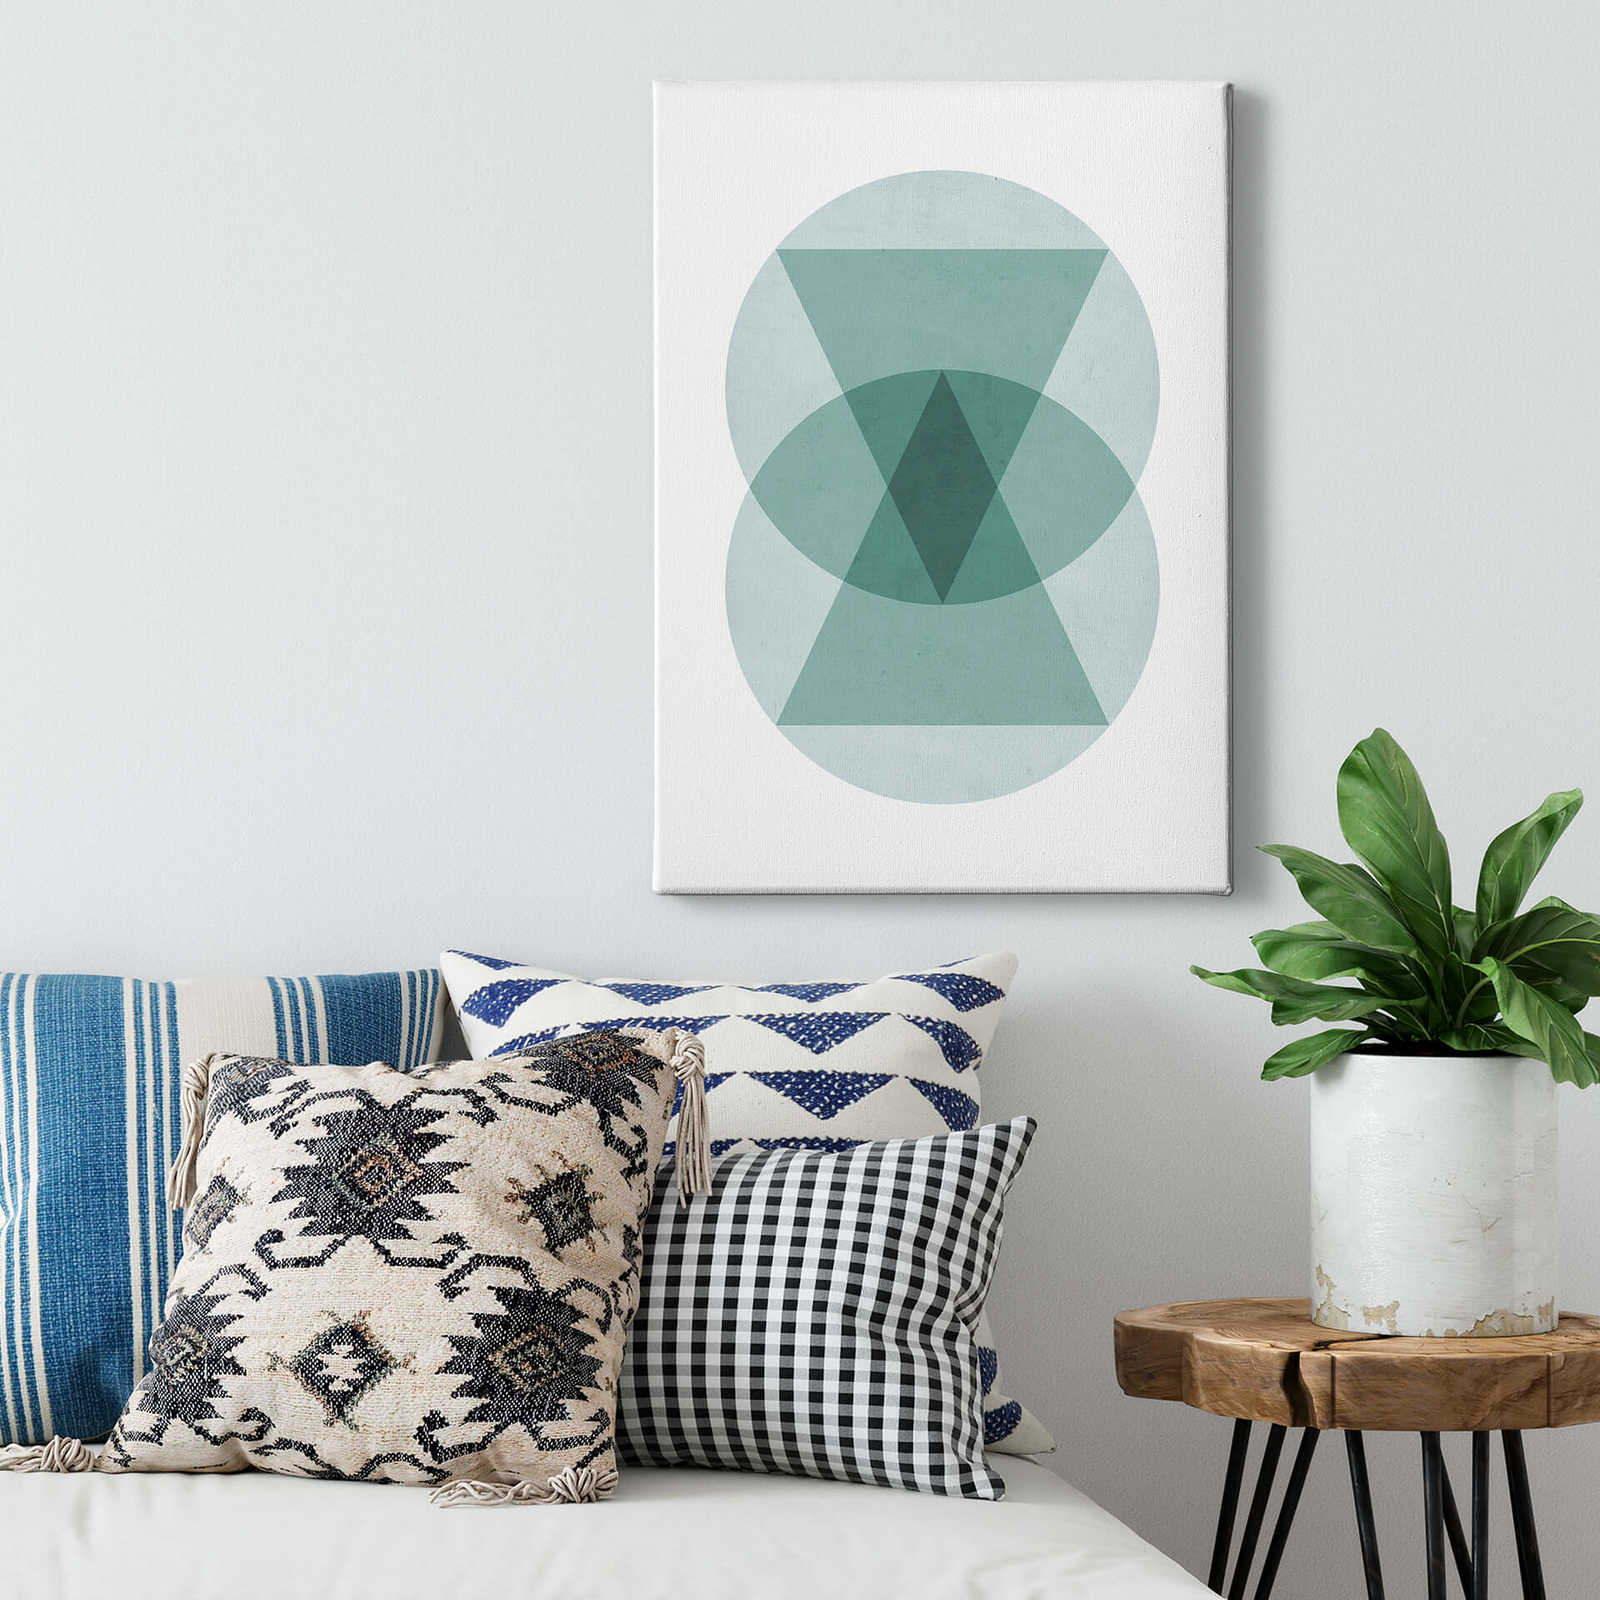             Canvas print geometric pattern circles triangles
        